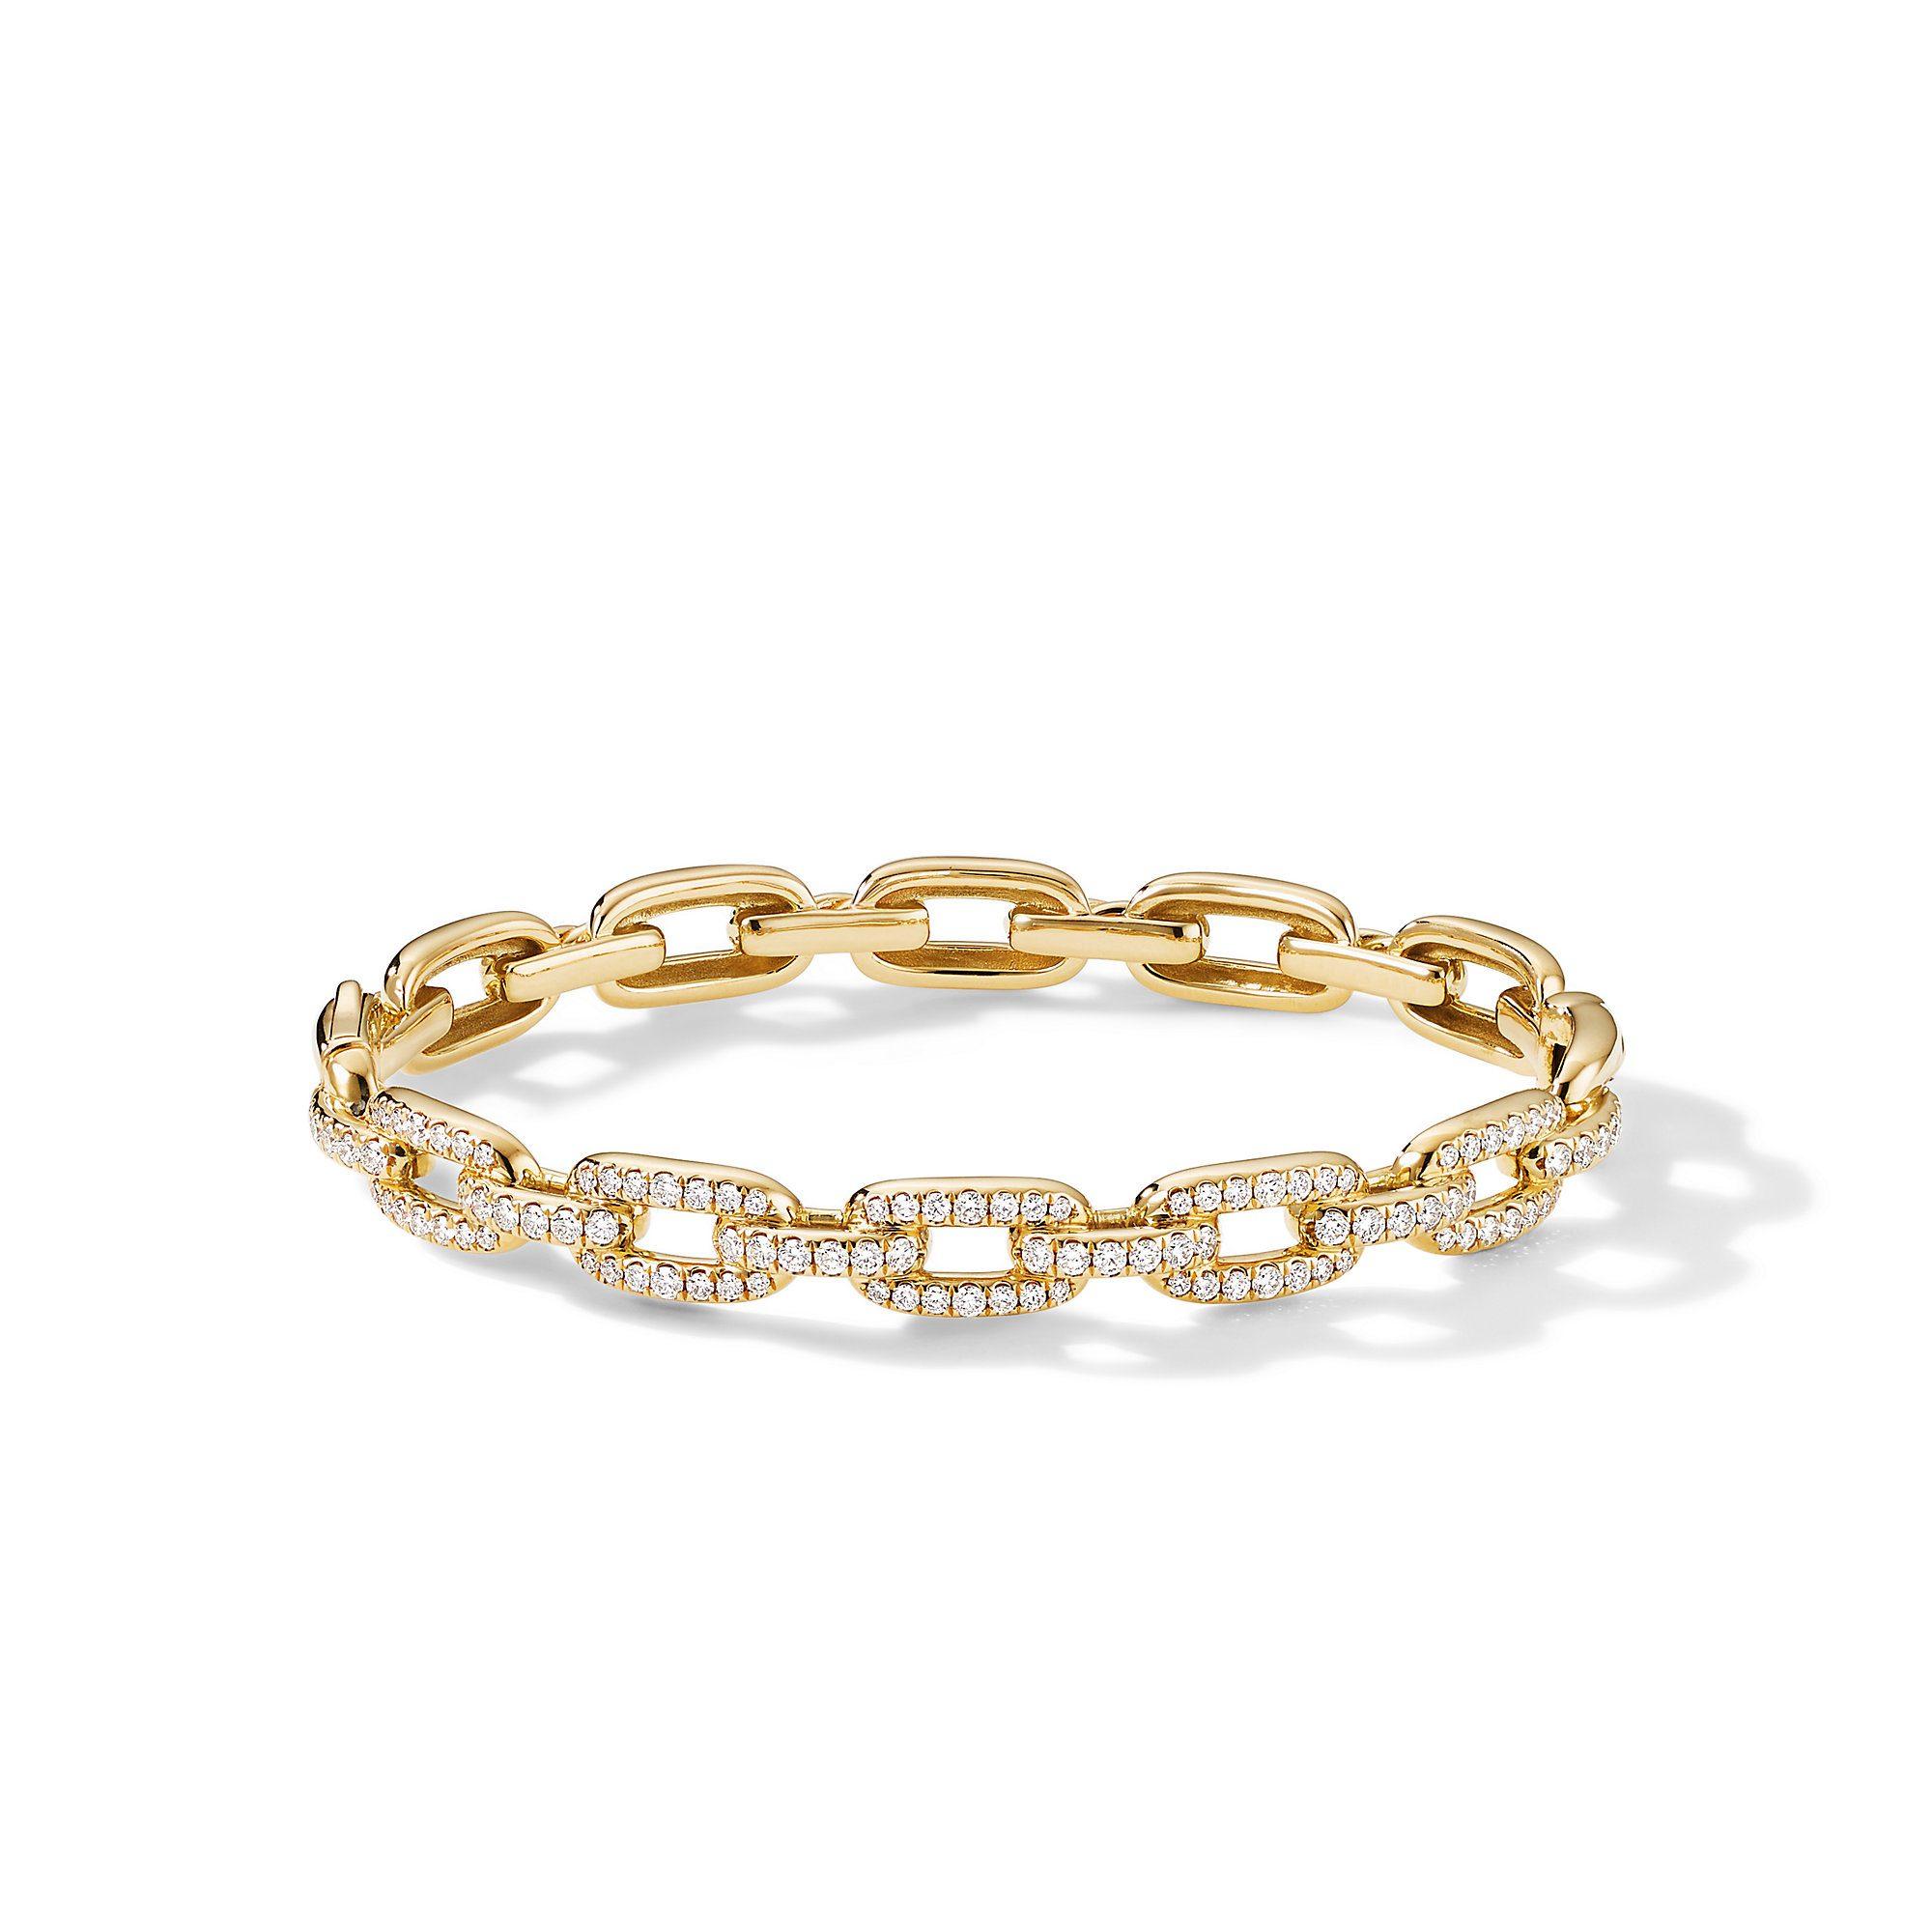 David Yurman Stax 7mm Chain Link Bracelet with Diamonds in 18k Gold